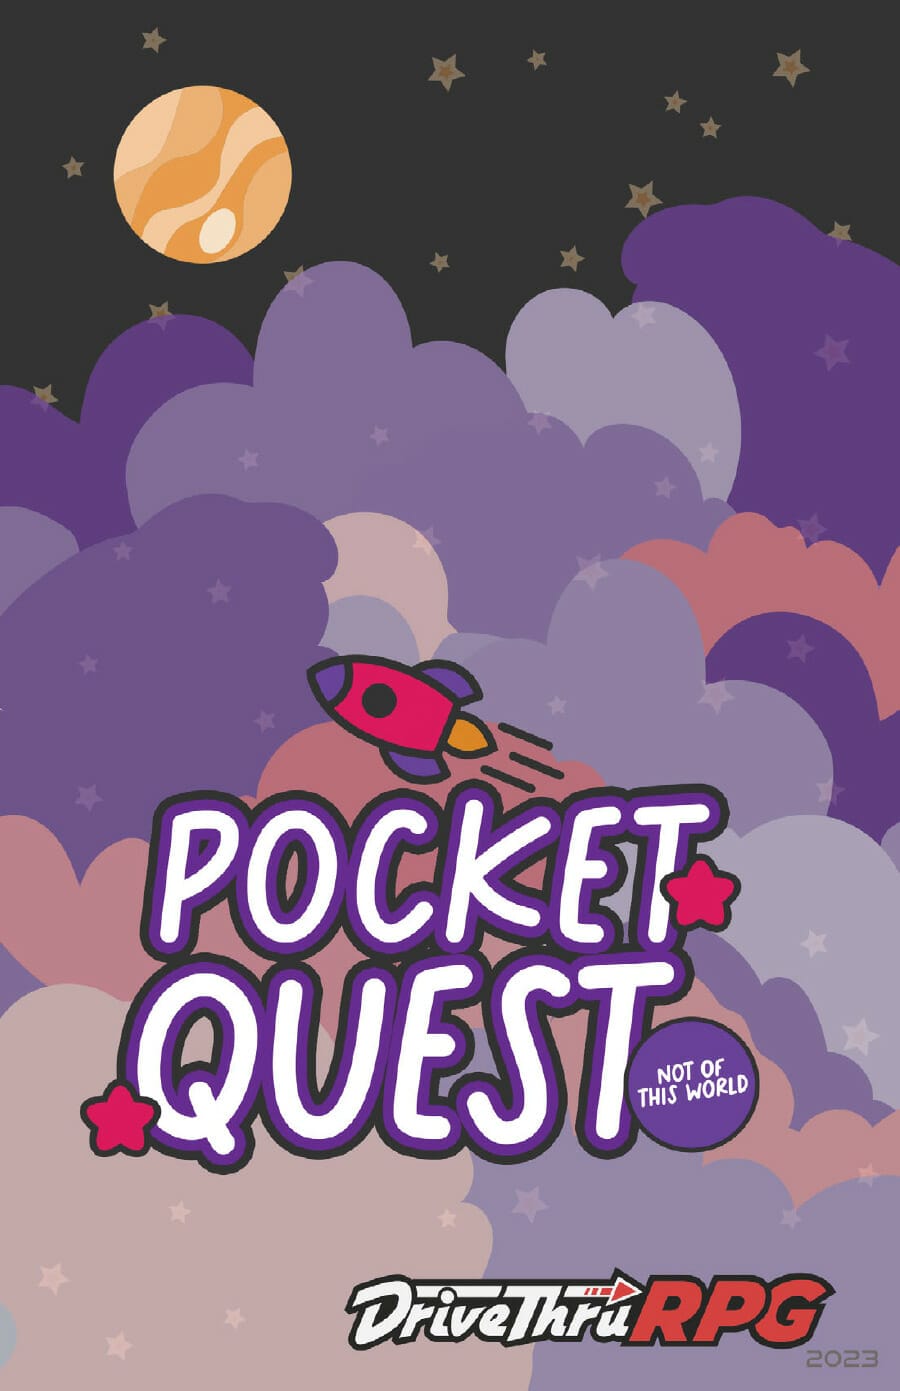 PocketQuest spaceship